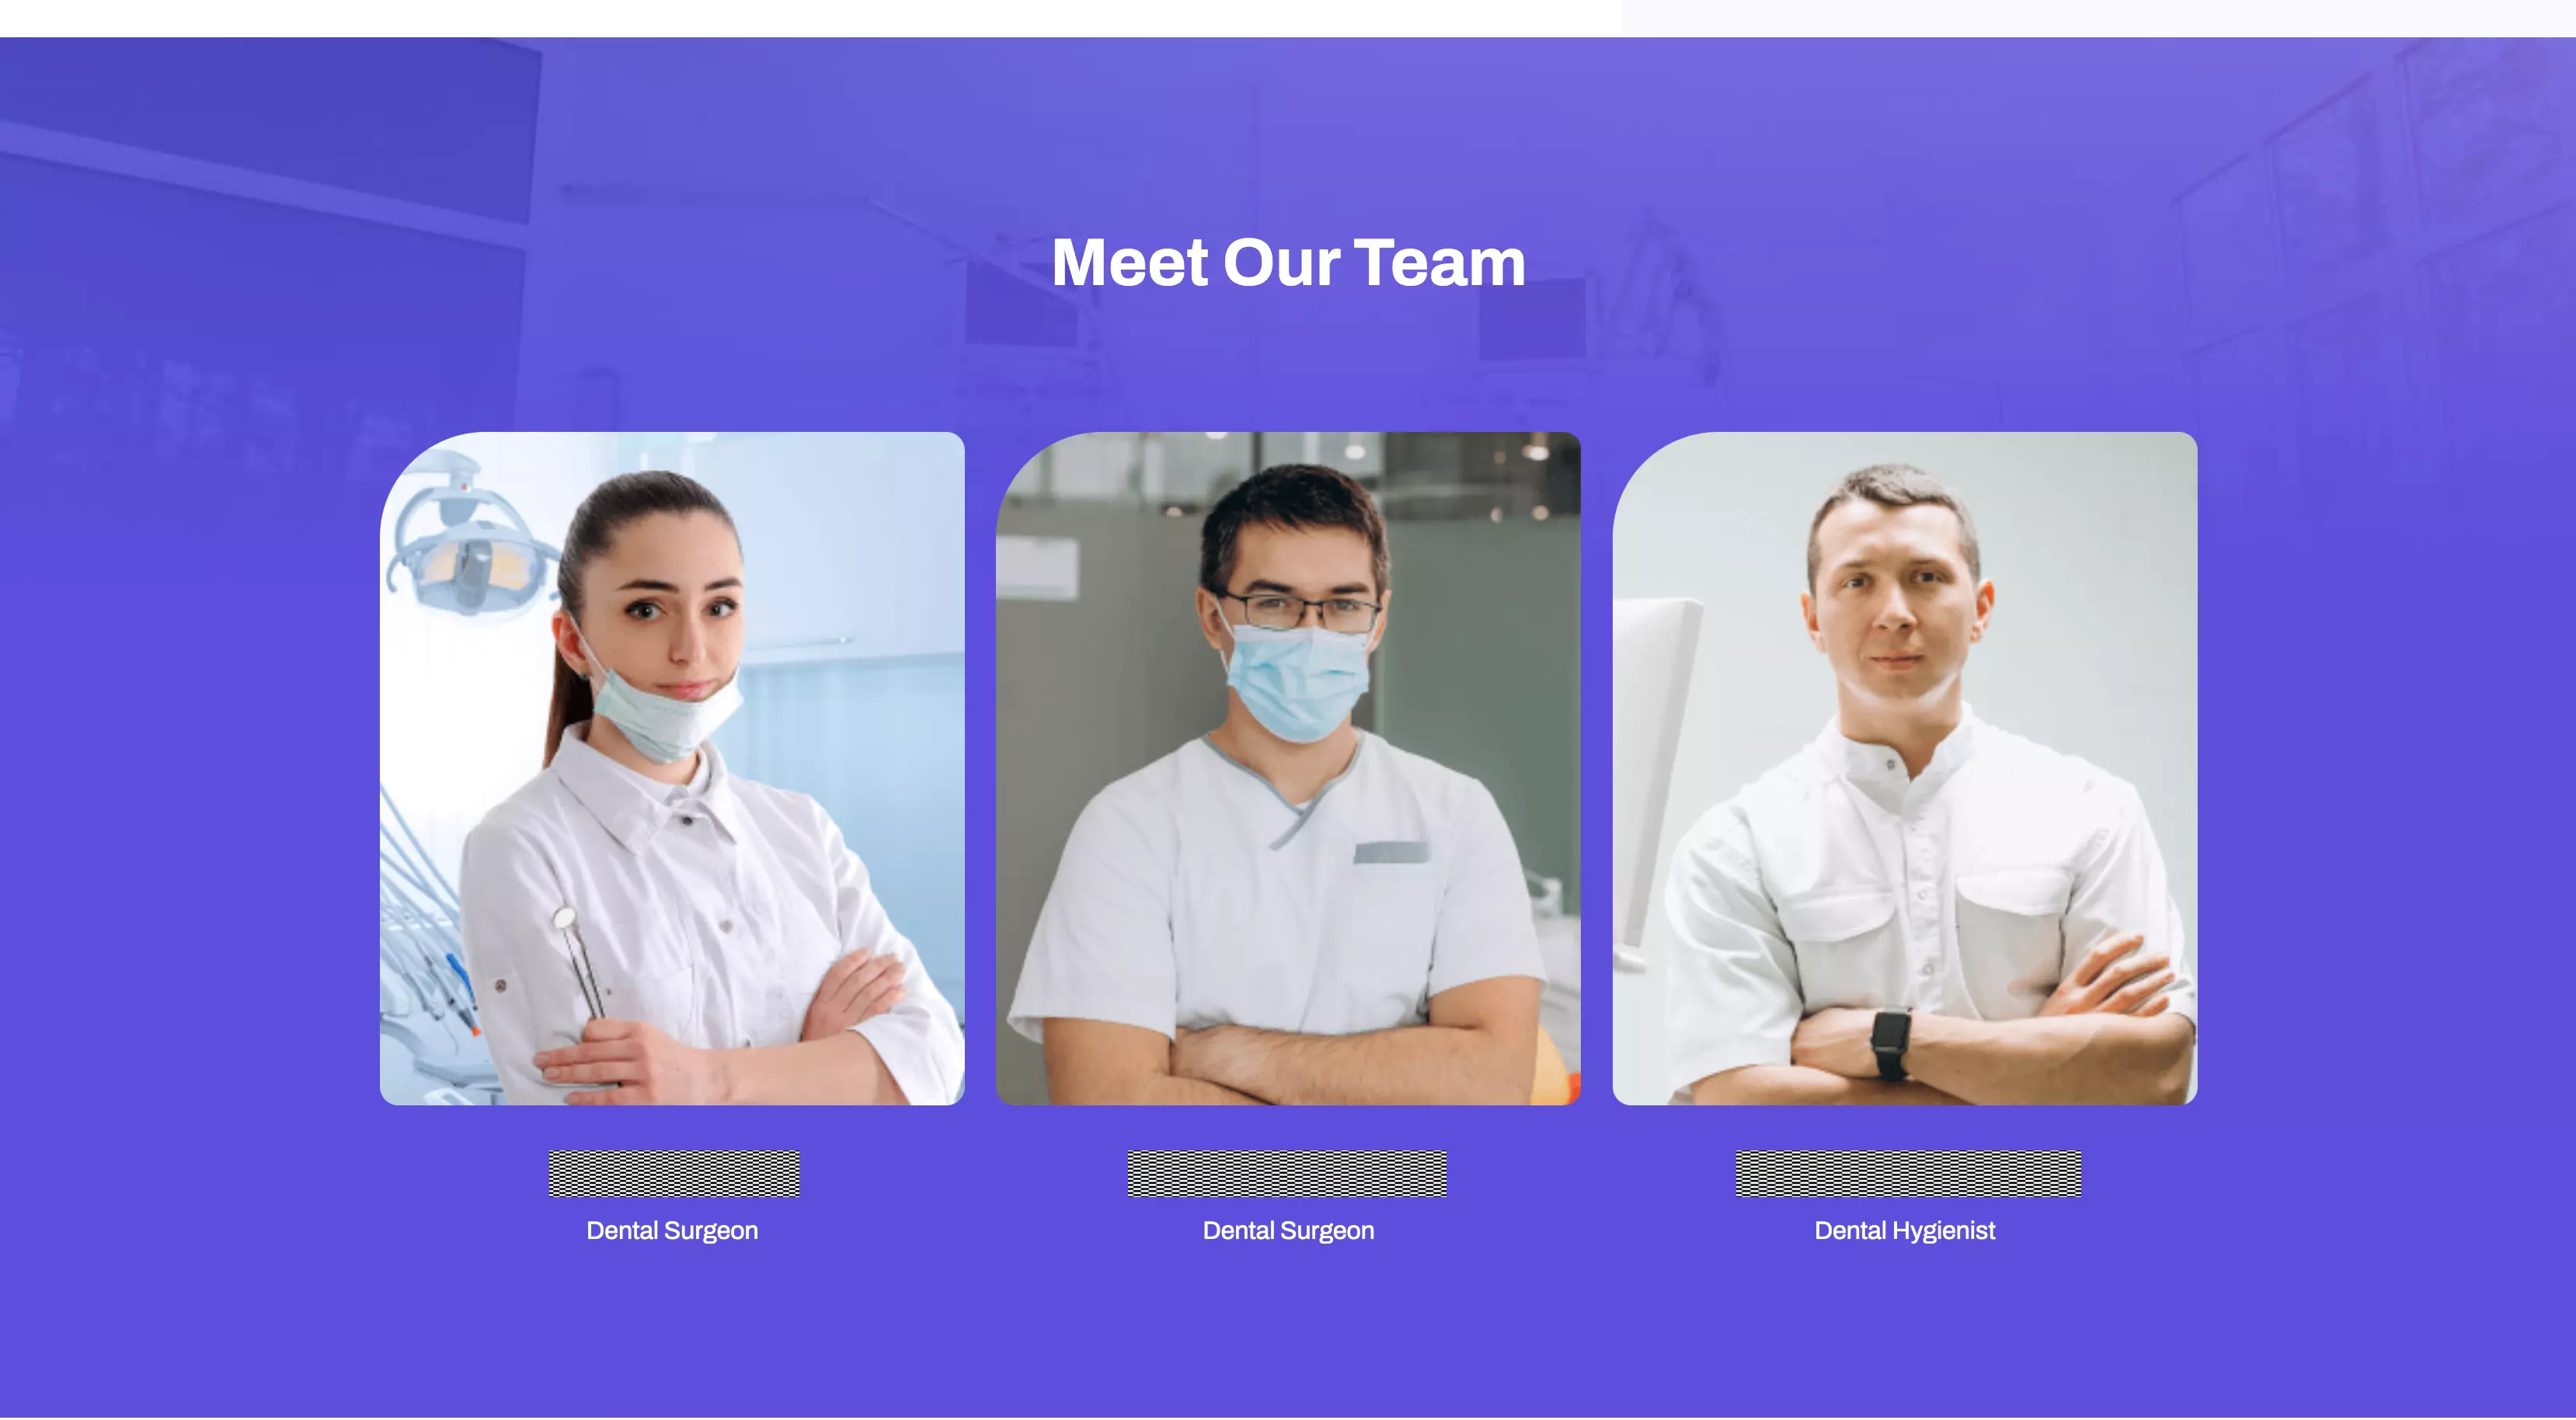 Dental office web site visual example part 5, team members